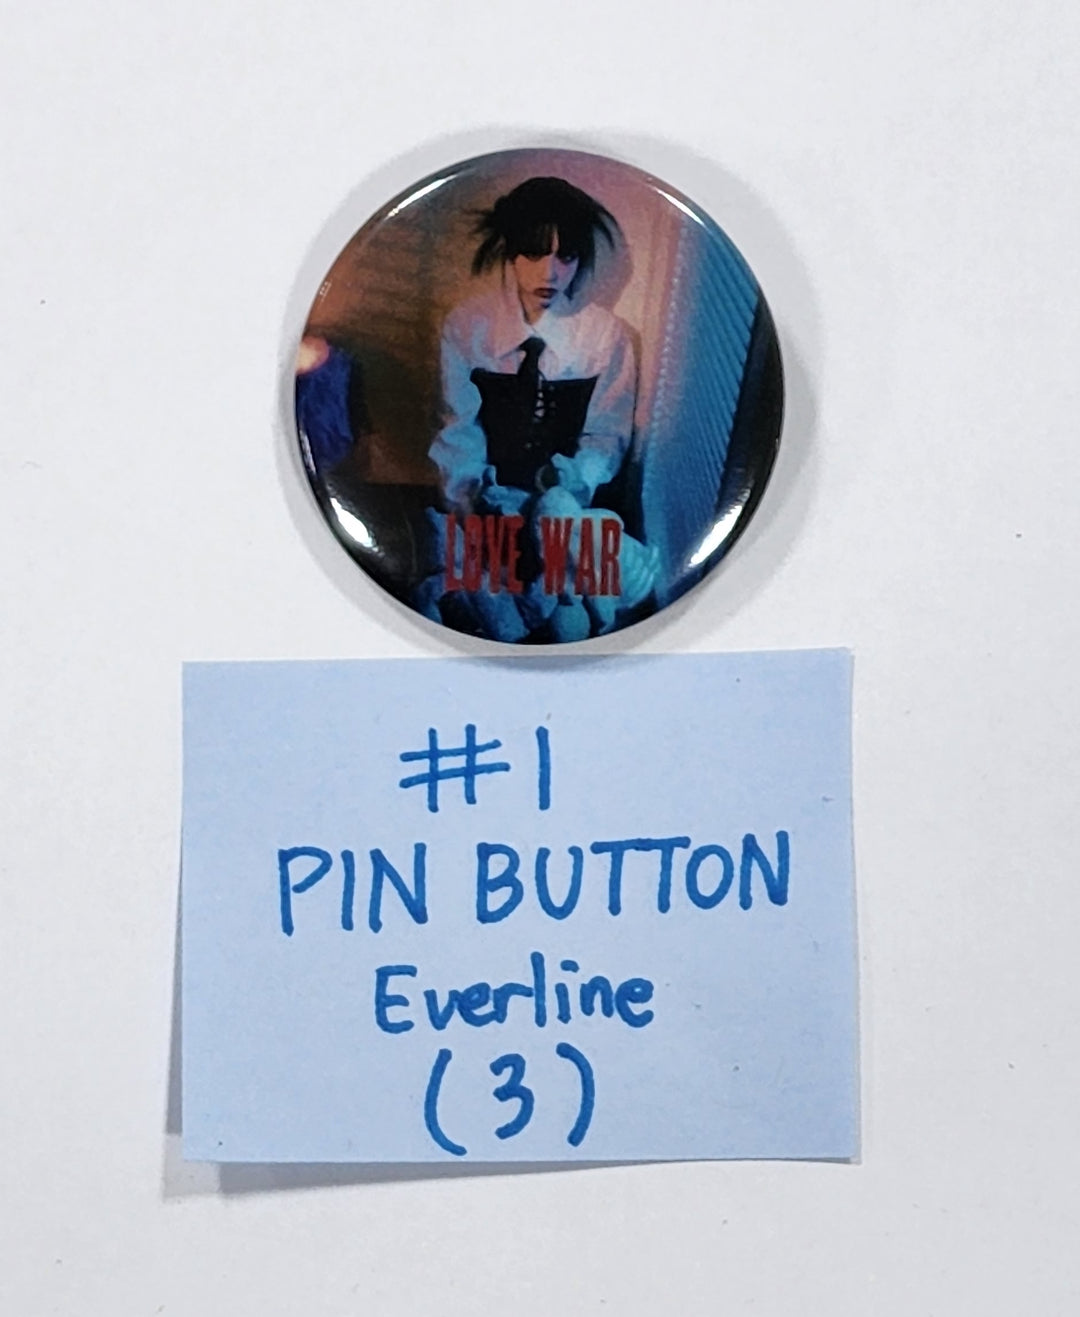 YENA "Love War" - Everline Pop-Up Store Gotcha Event MD [Pin Button, Can mirror, Keyring]